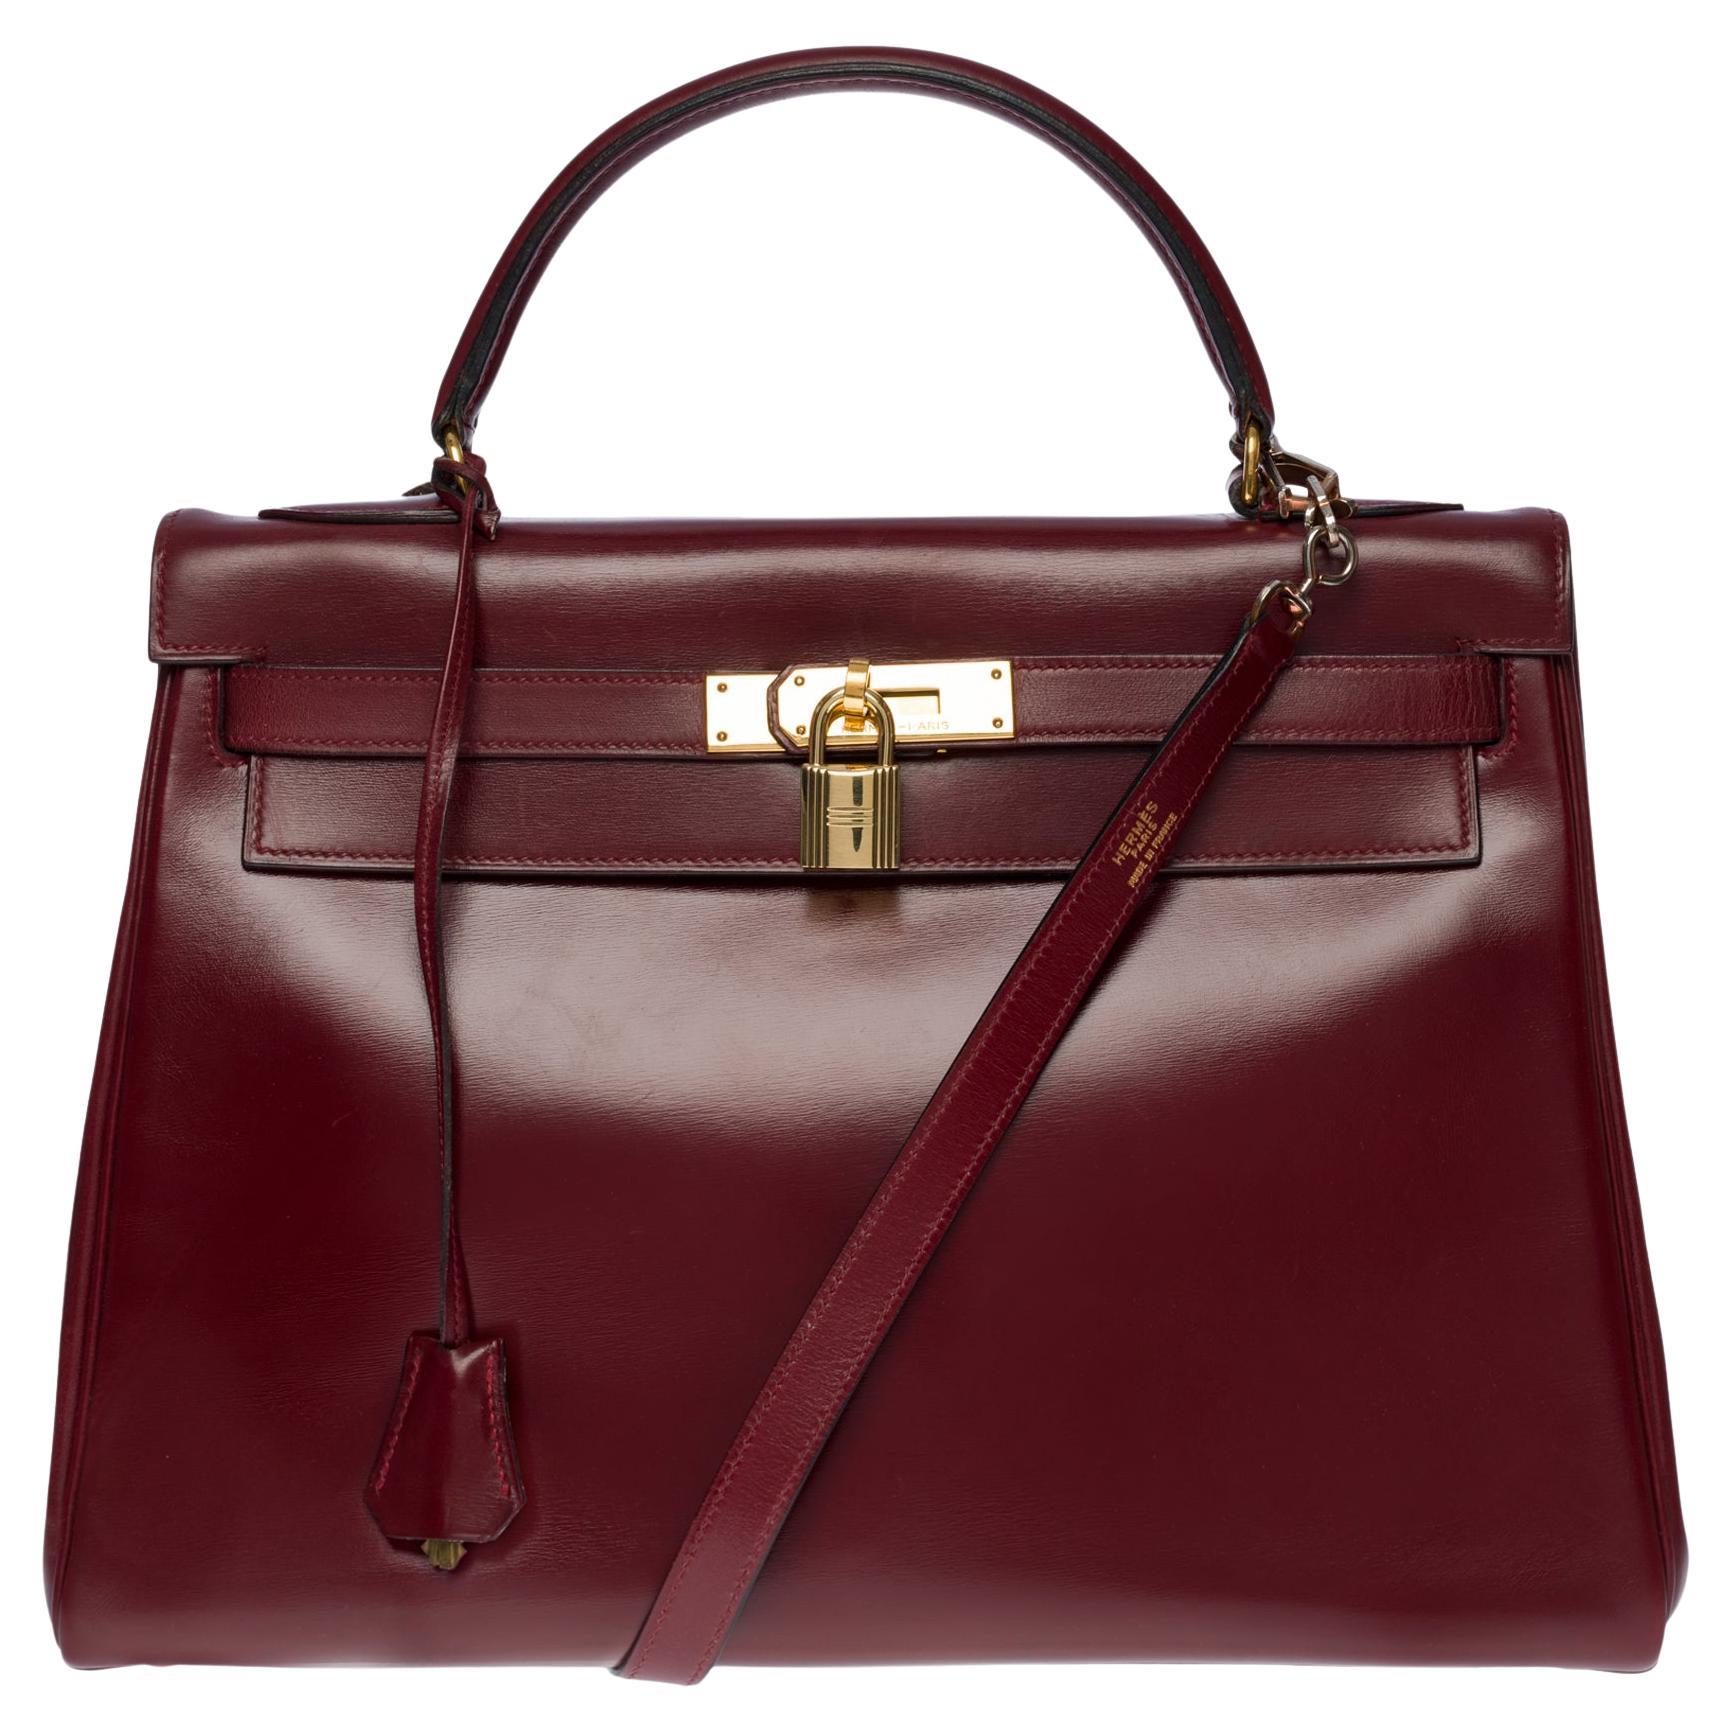 Gorgeous Hermès Kelly 32 retourne handbag strap in Burgundy Calf box leather,GHW